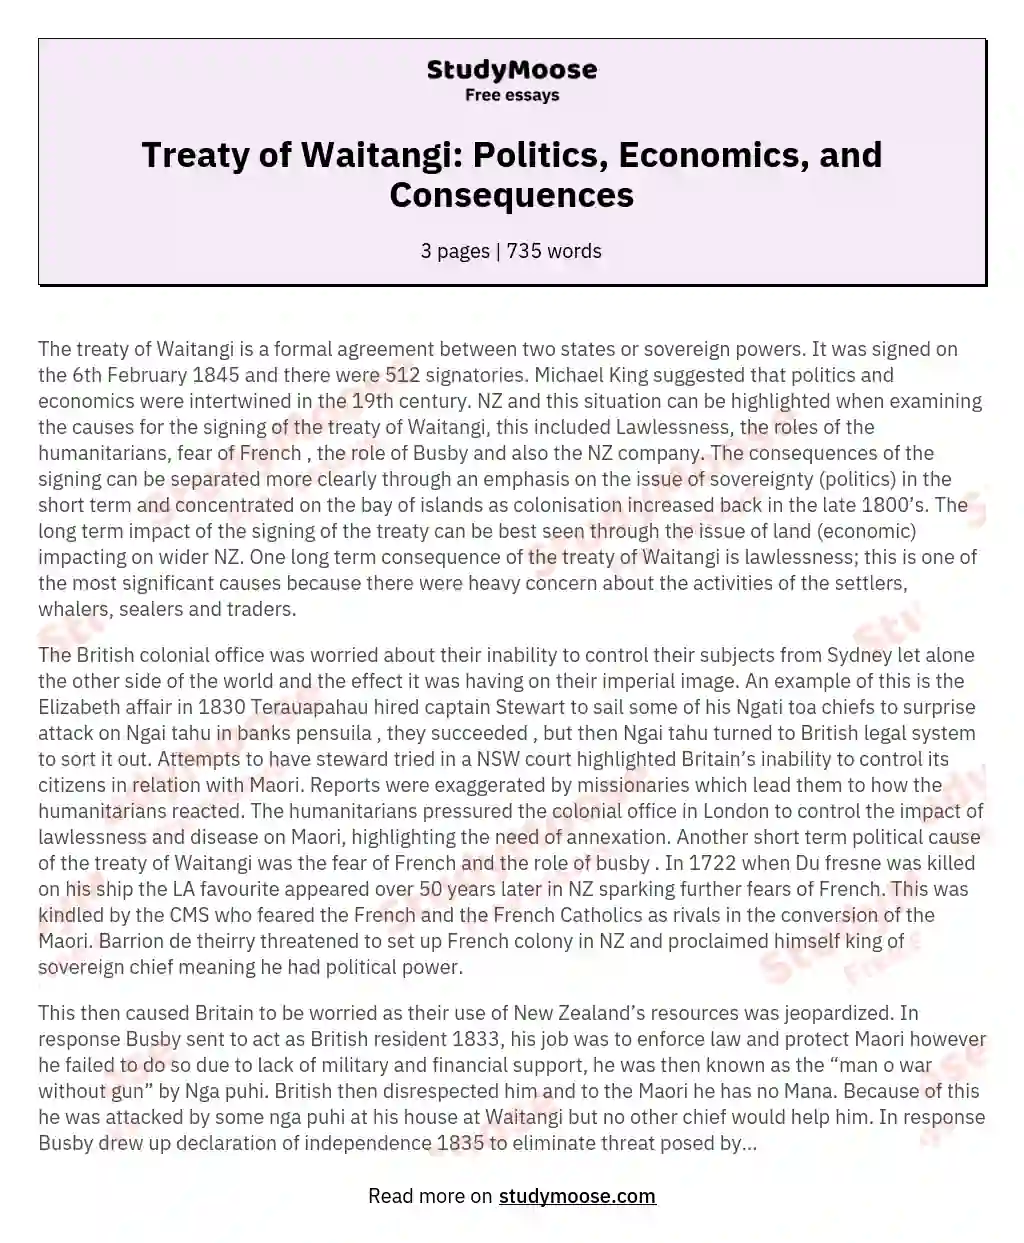 Treaty of Waitangi: Politics, Economics, and Consequences essay